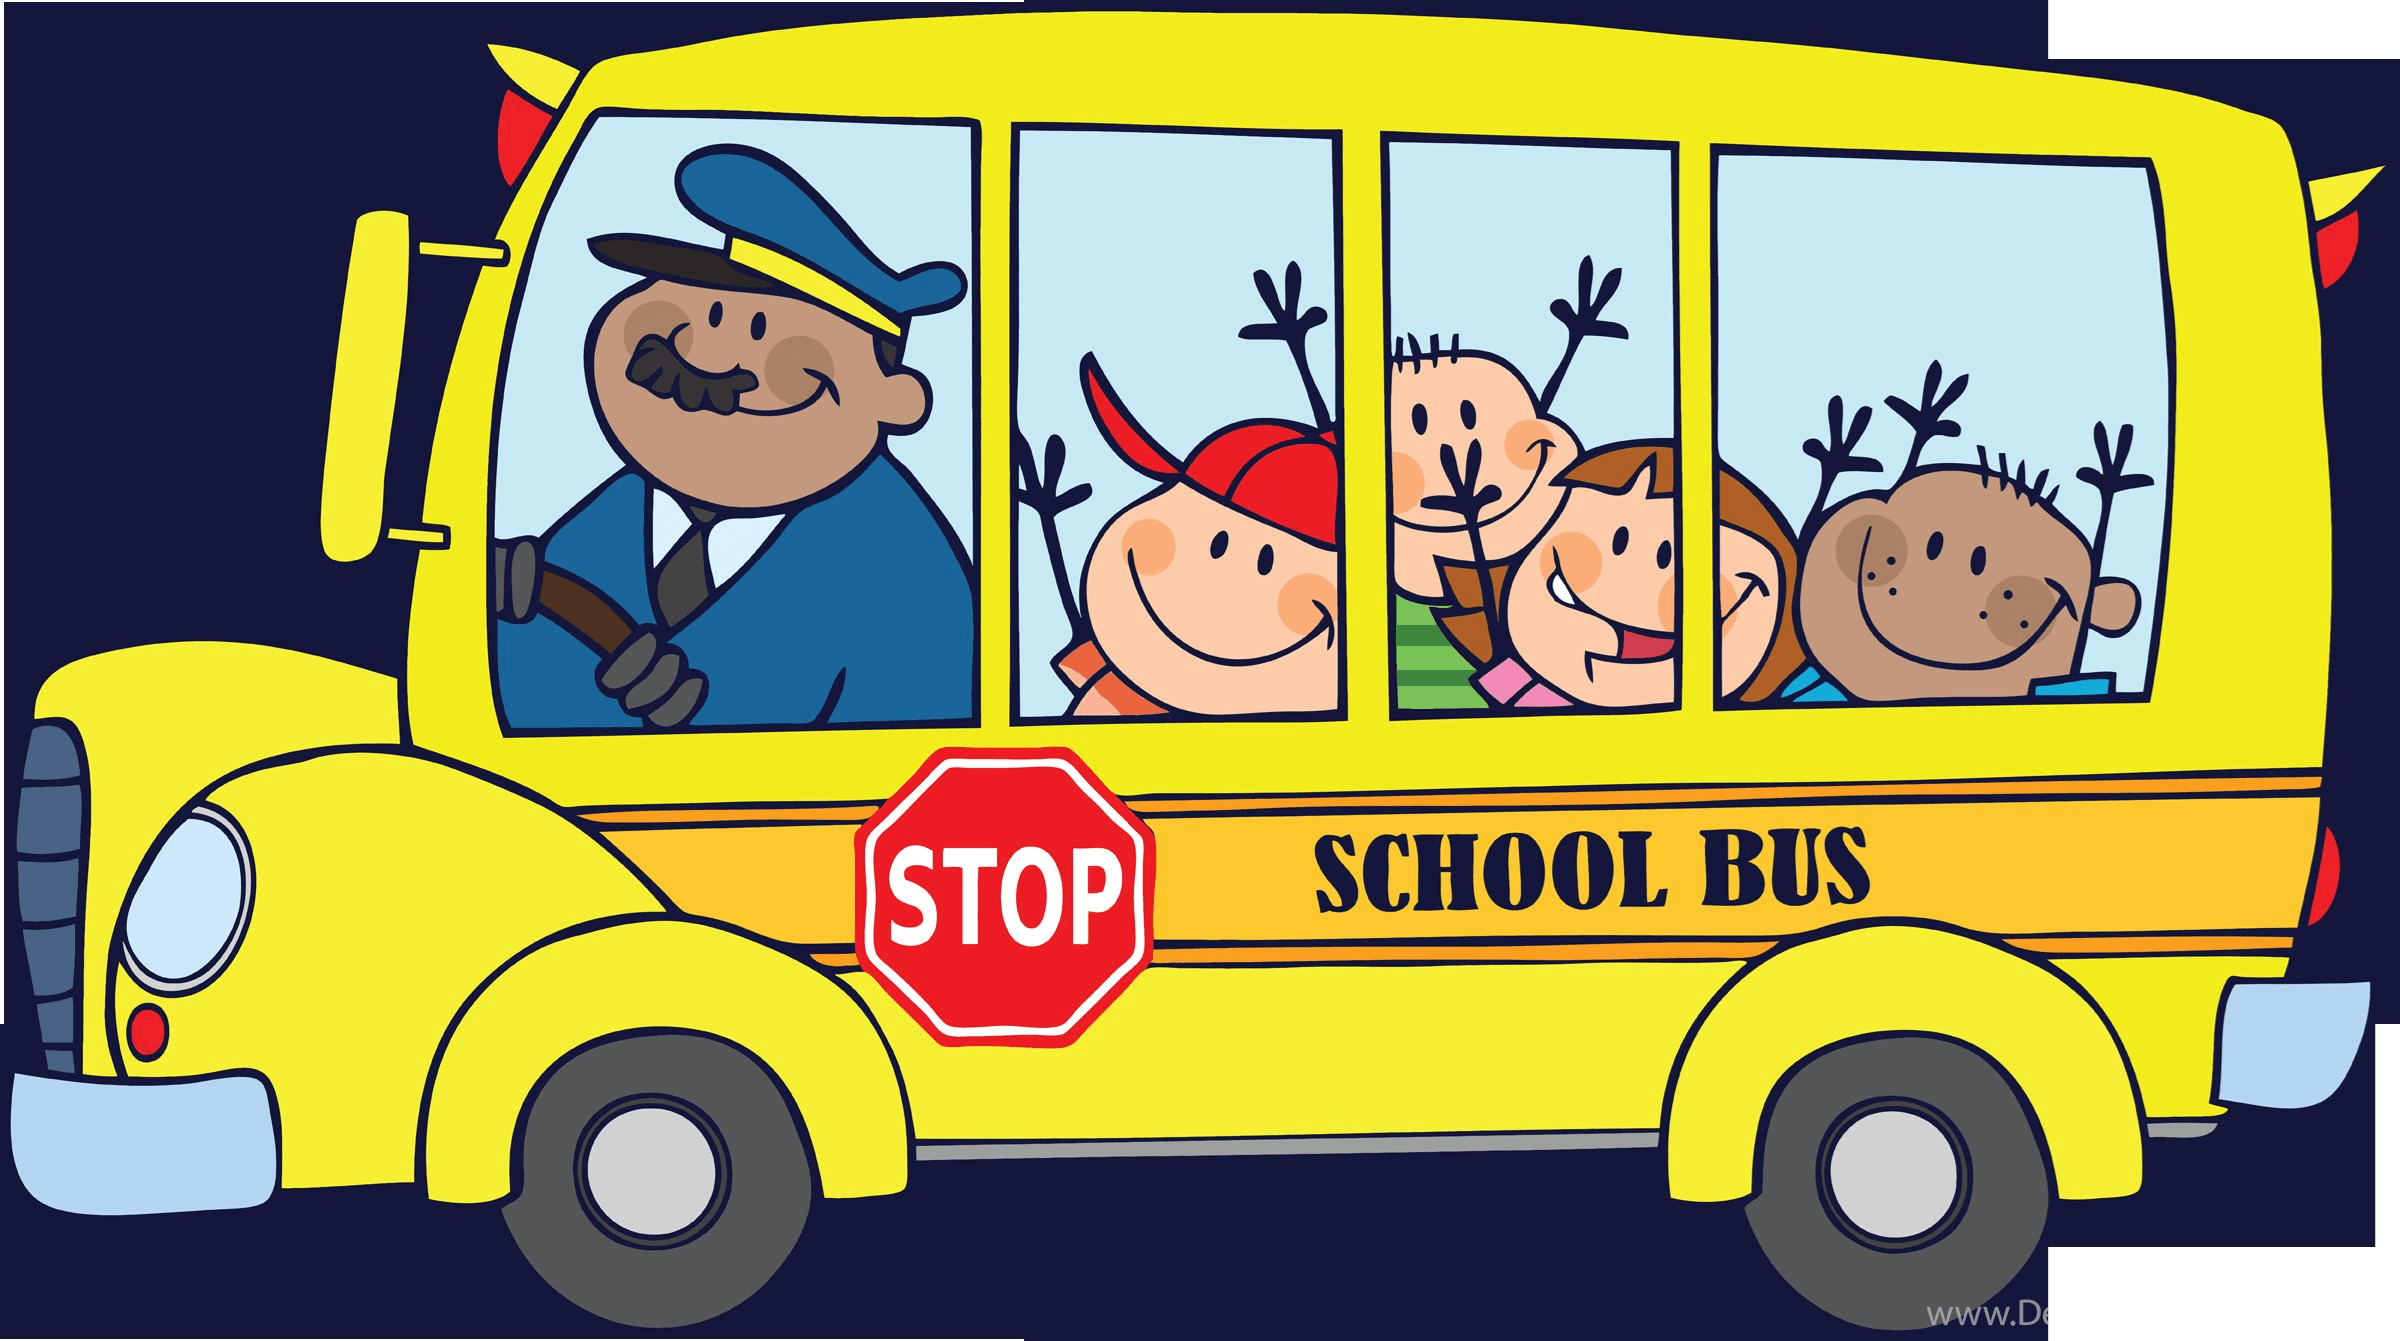 School Bus Cartoon Image HD Wallpaper And Picture Desktop Background